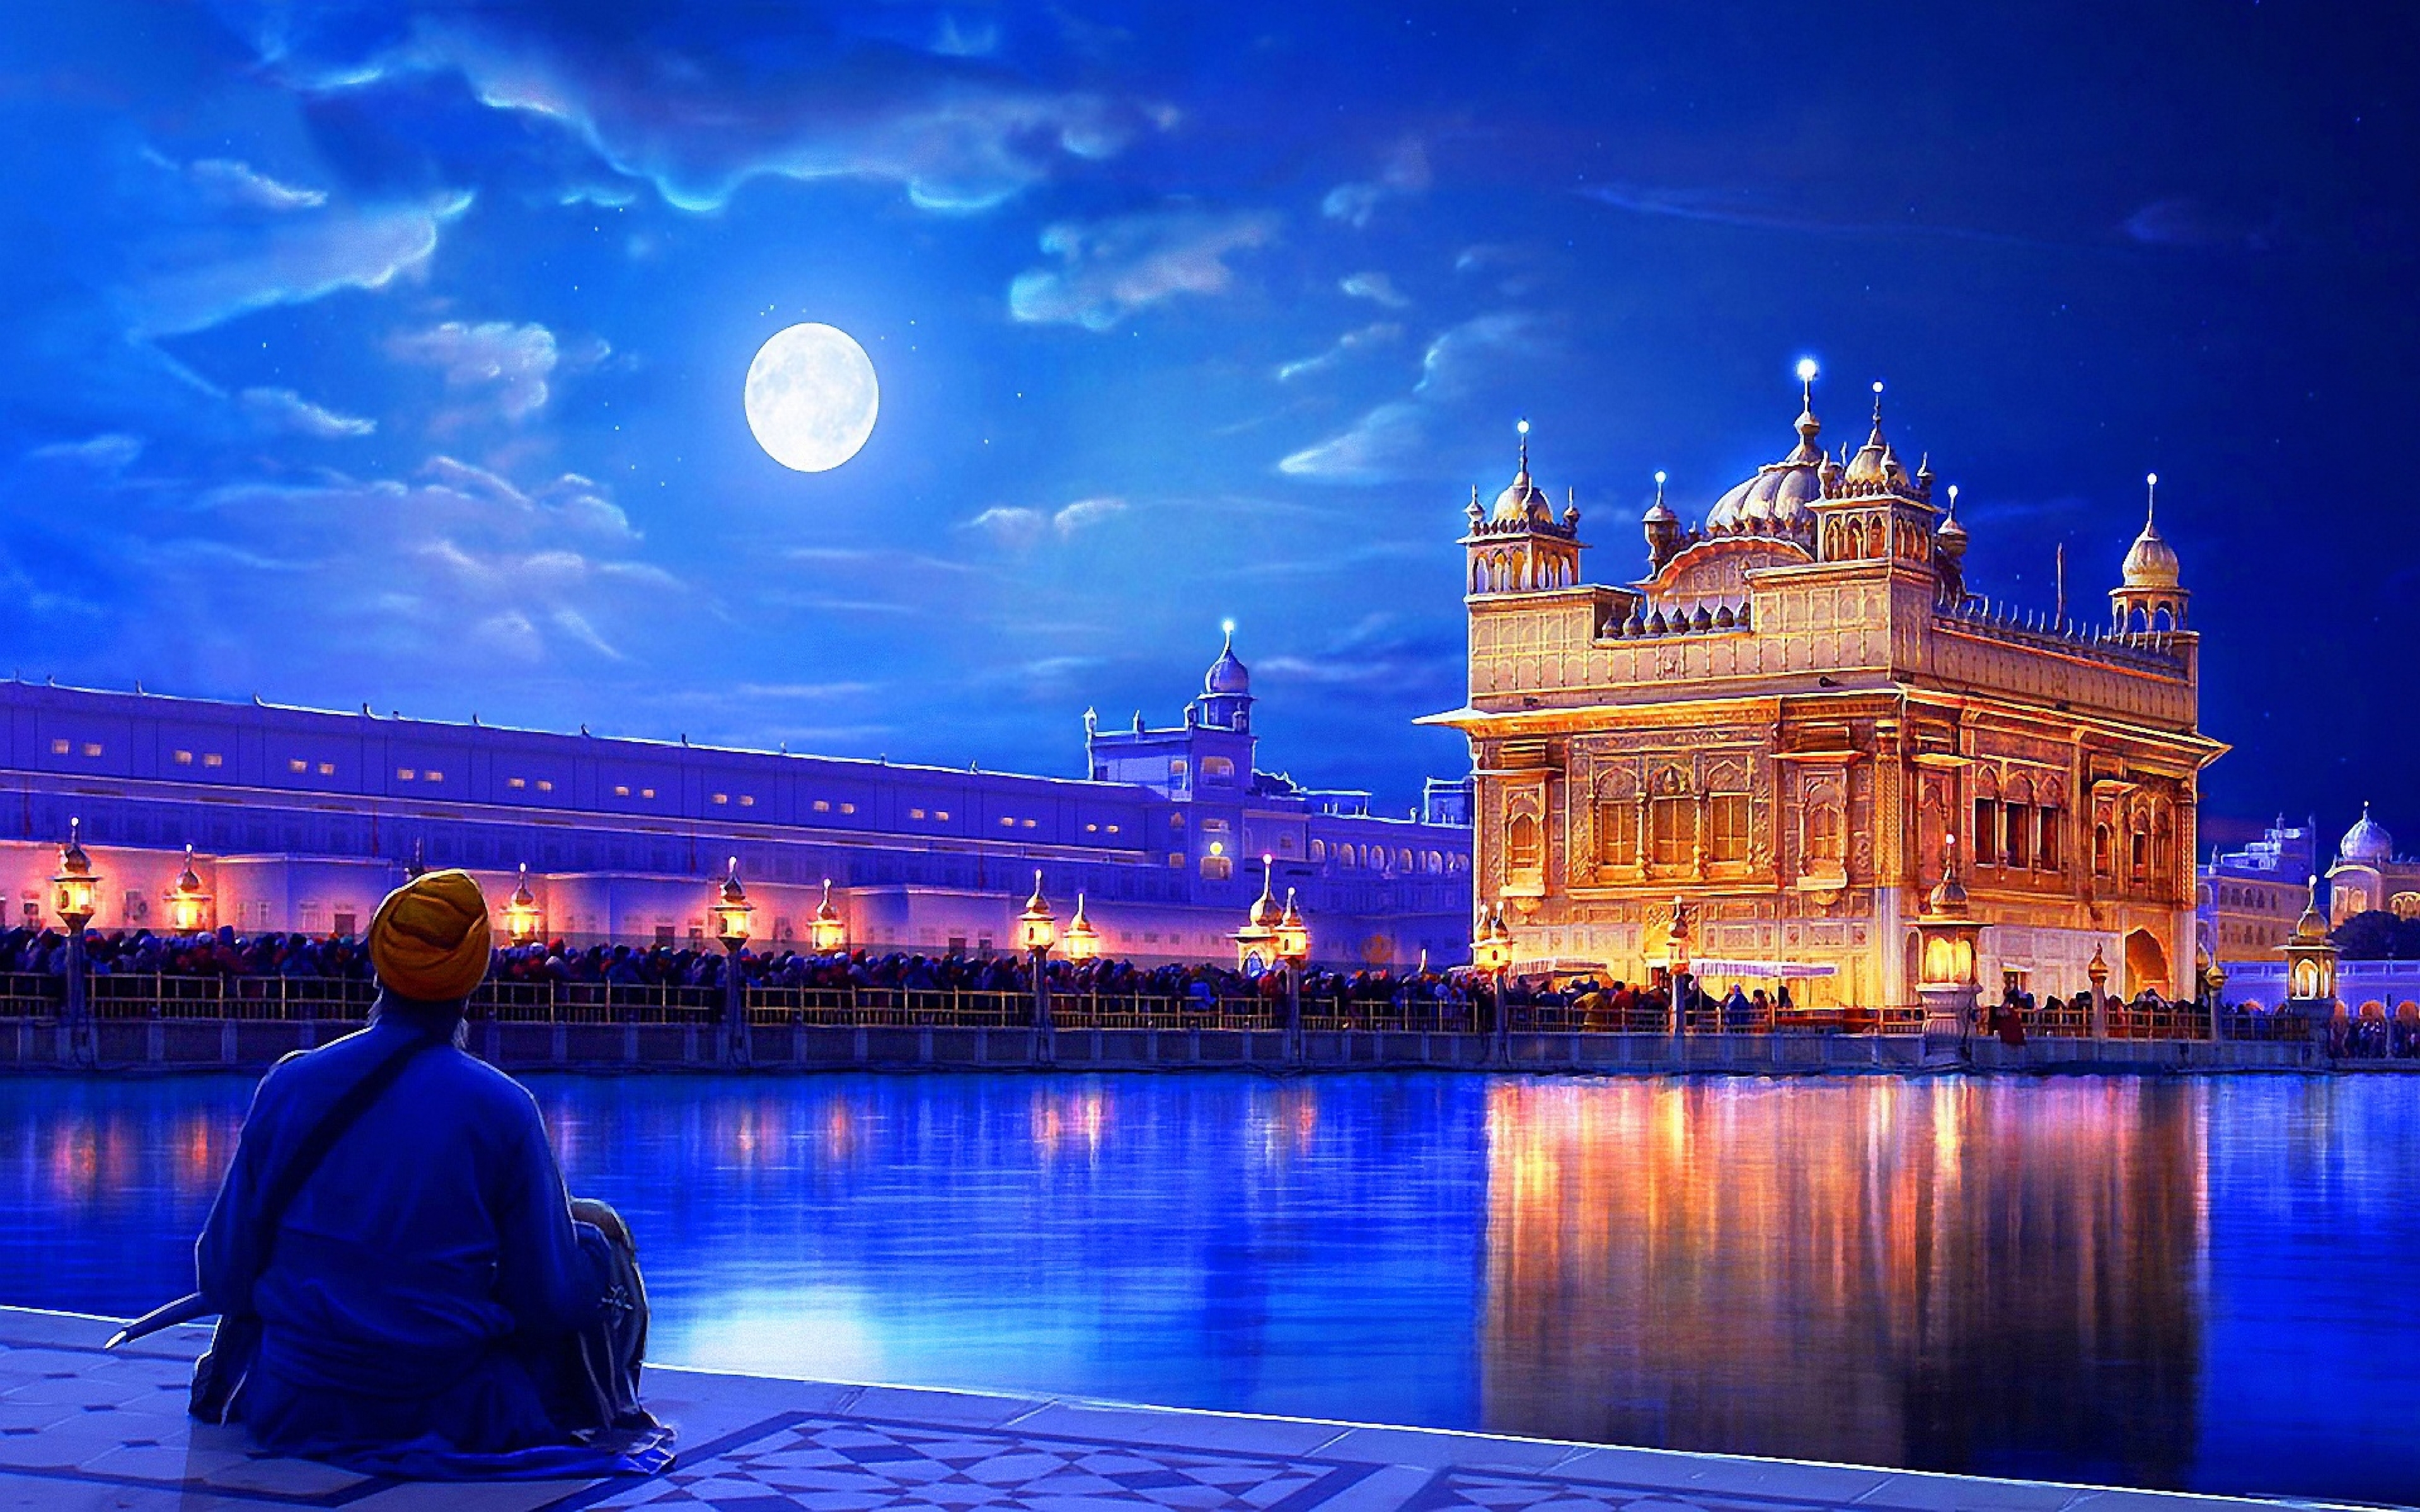 Golden Temple Amritsar India for 3840 x 2400 4K Retina Display resolution